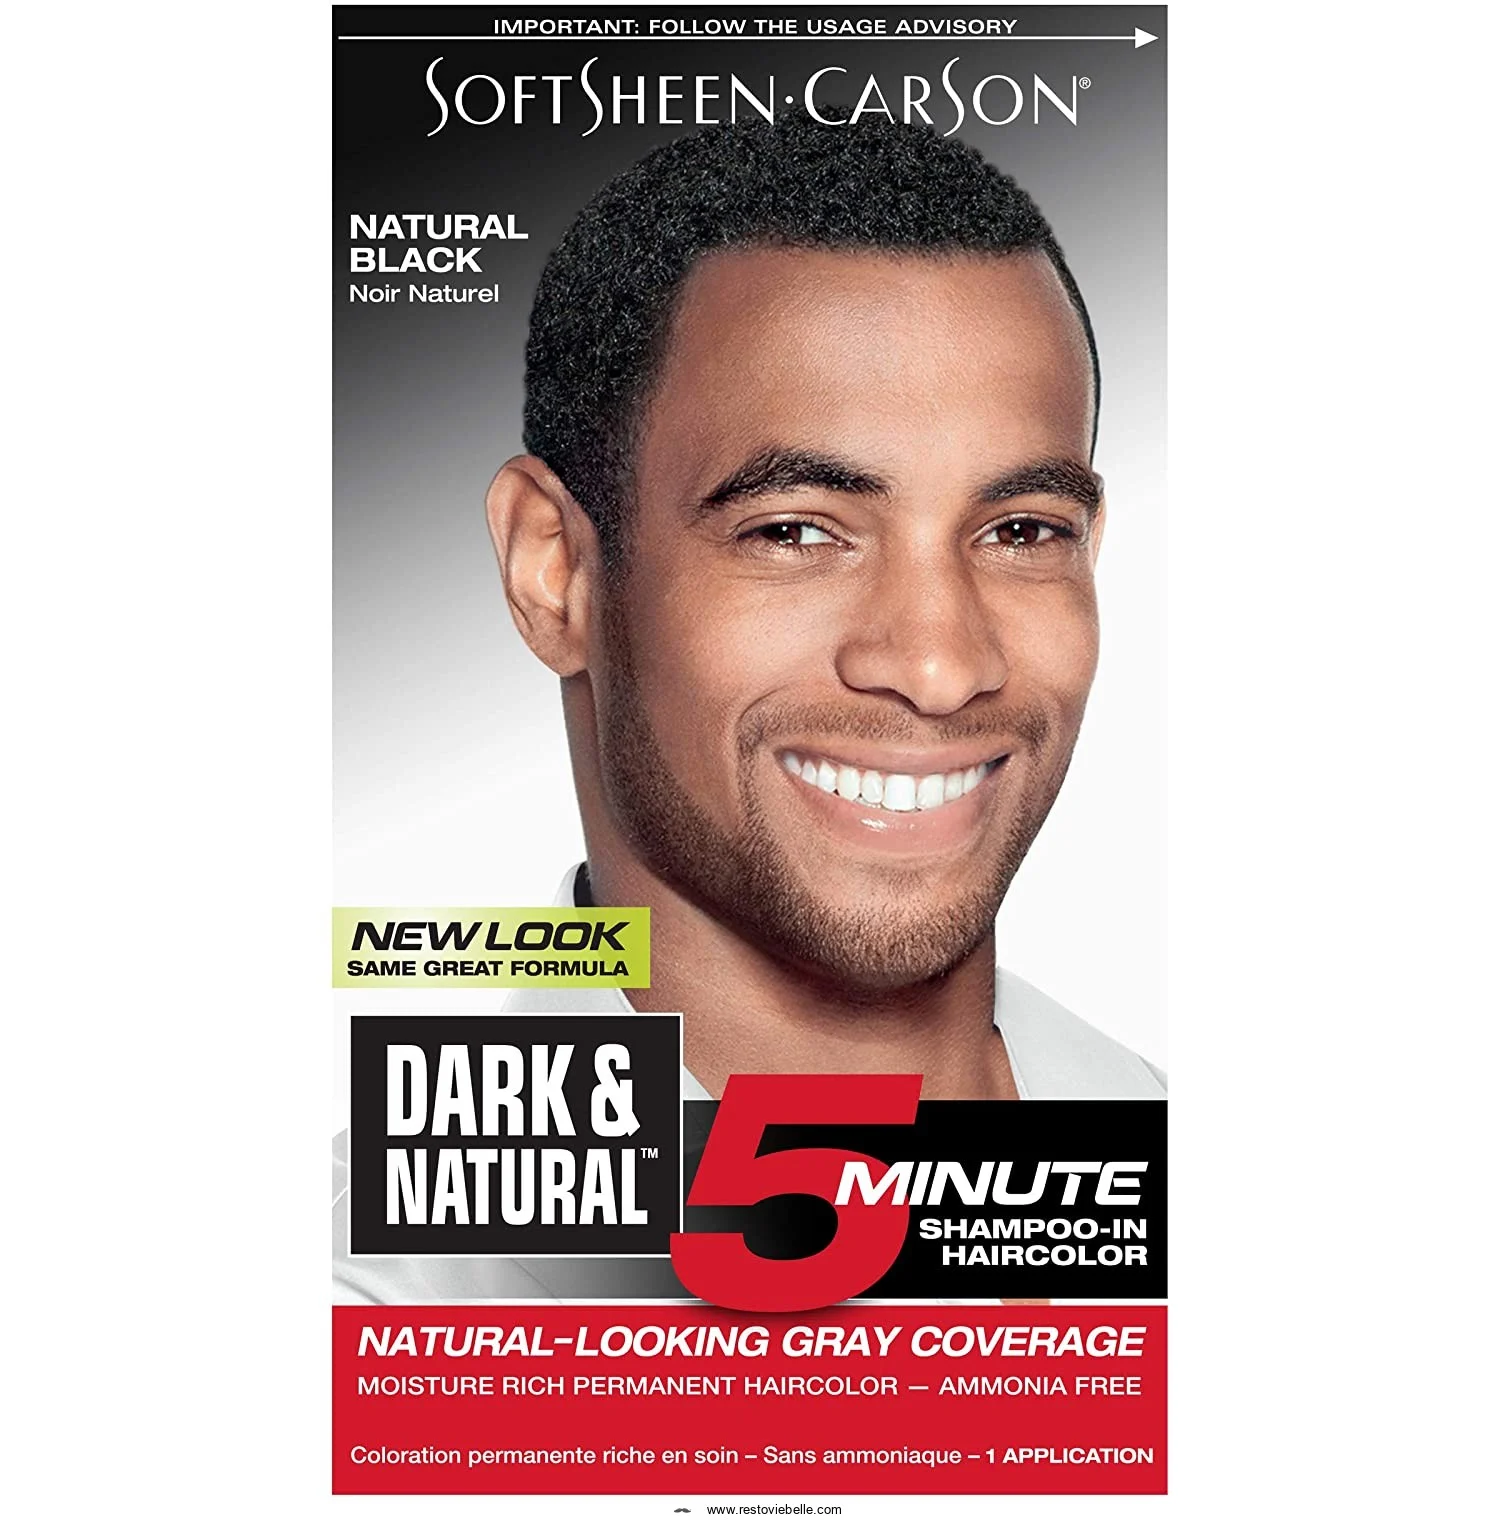 SoftSheen-Carson Dark & Natural Hair